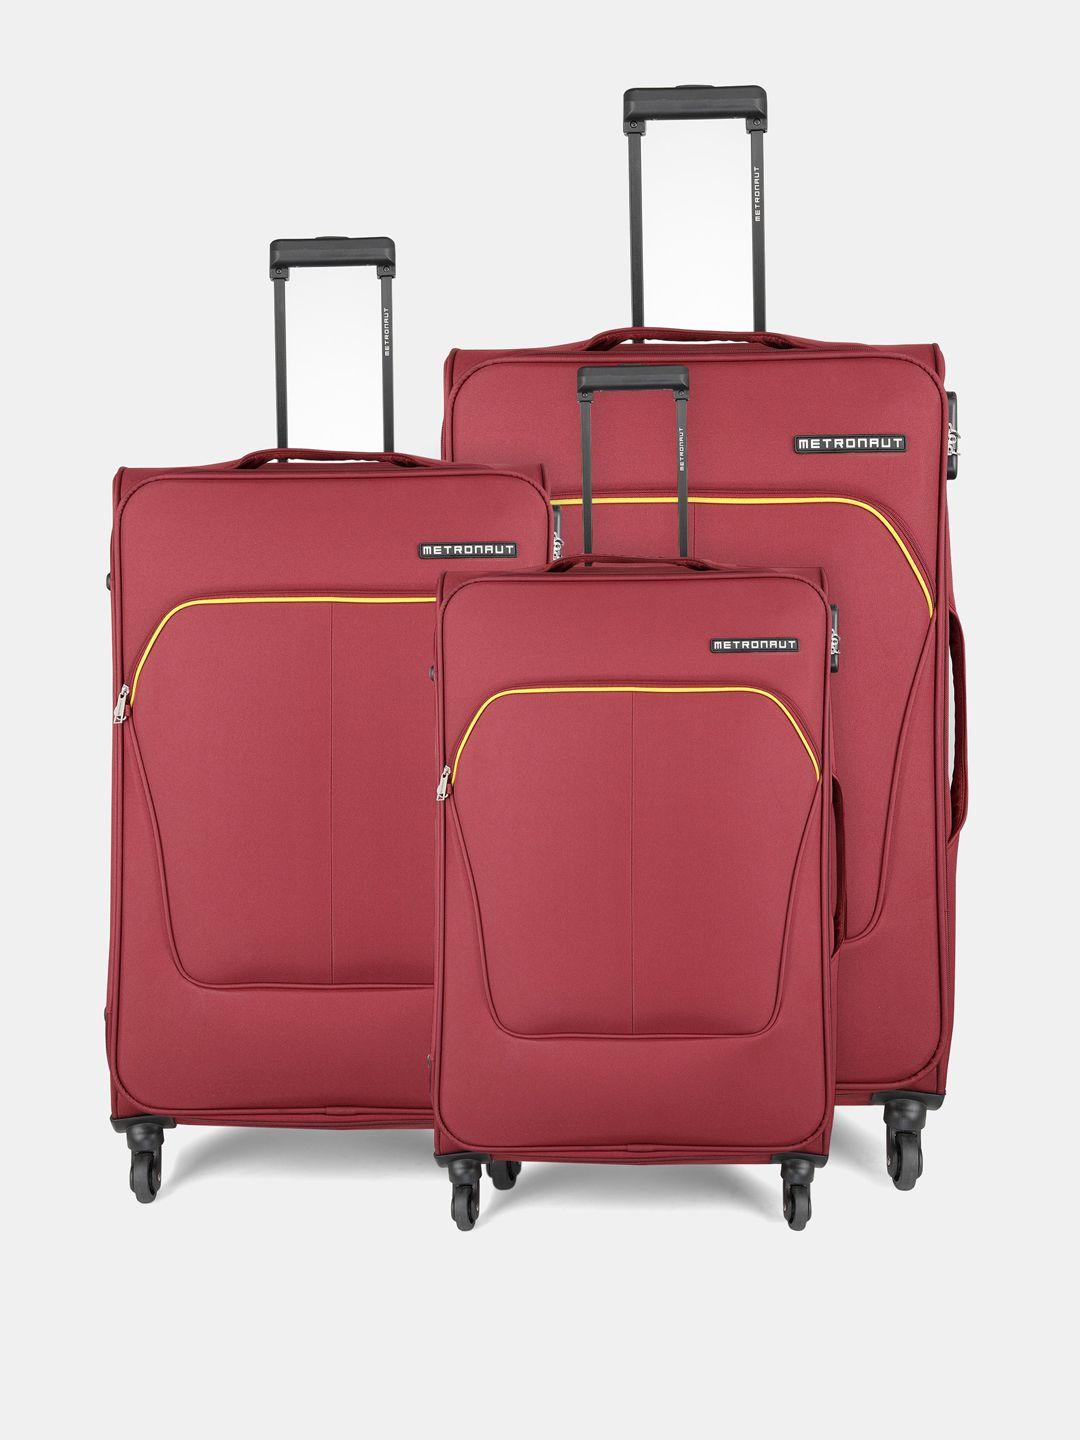 metronaut unisex set of 3 trolley suitcases - cabin, medium and large